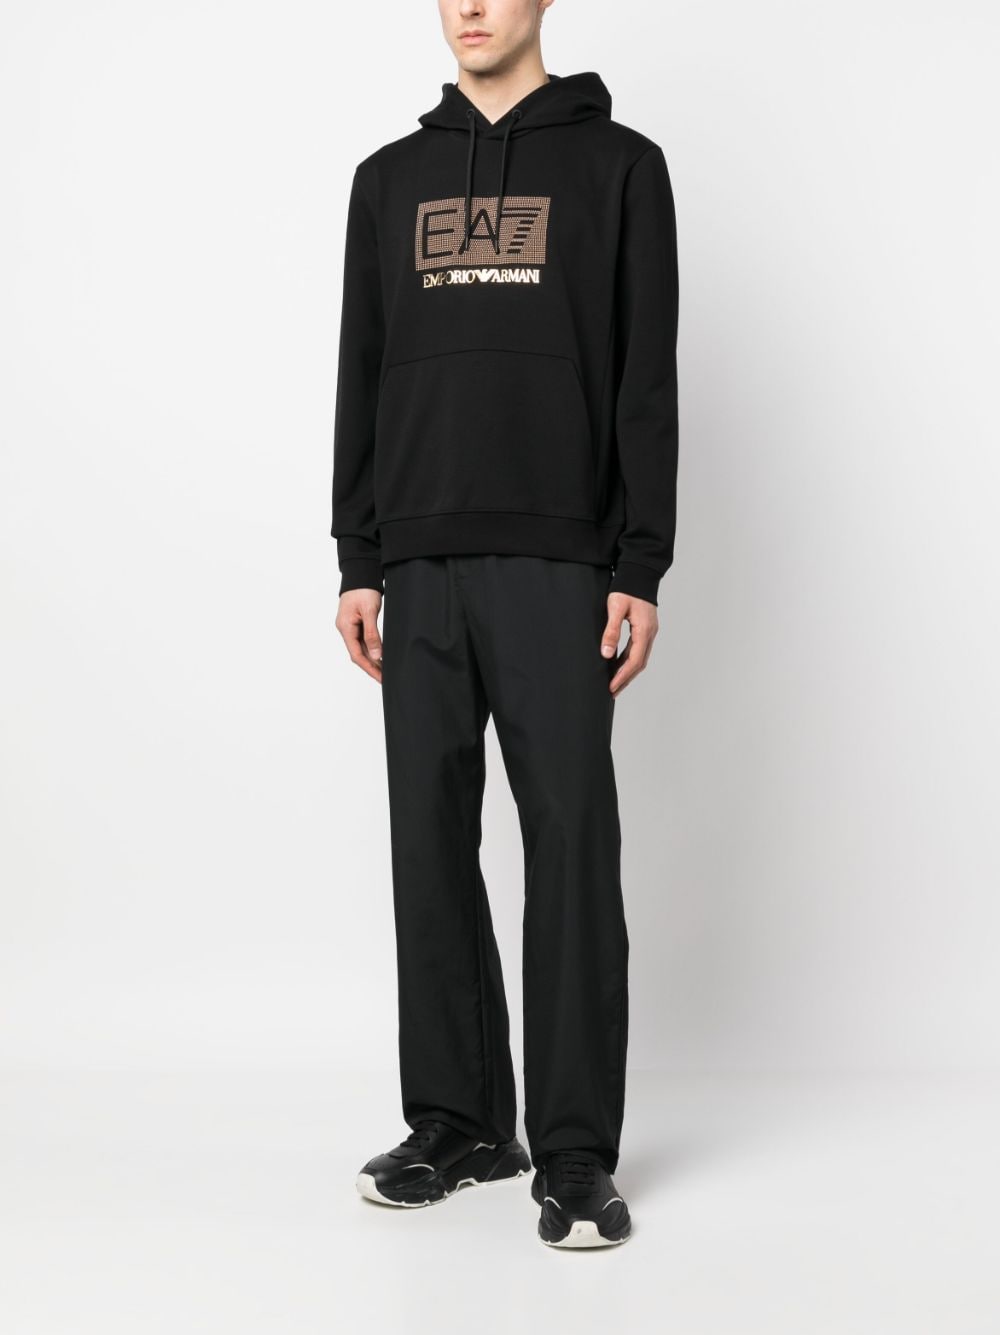 Ea7 Emporio Armani logo-embellished Hoodie Sweatshirt - Farfetch